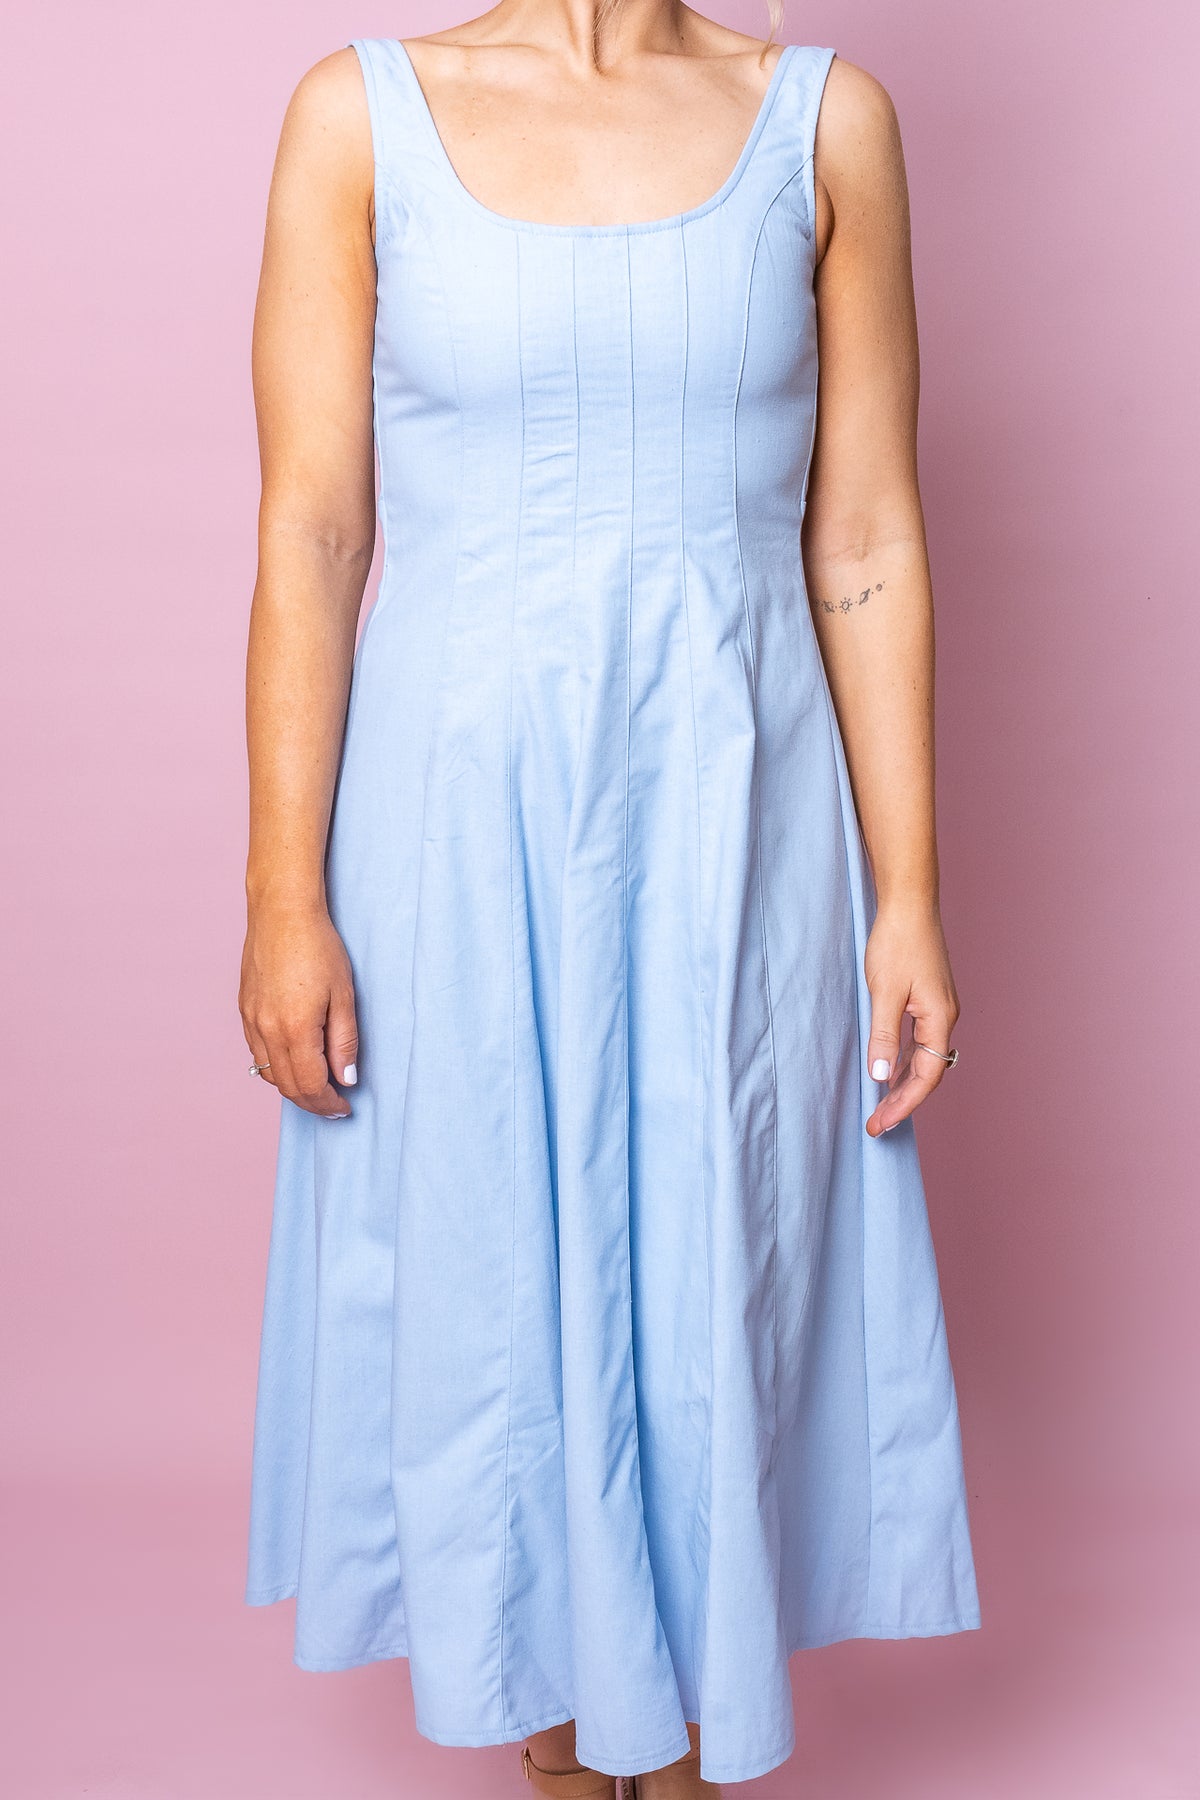 Indigo Dress in Light Blue